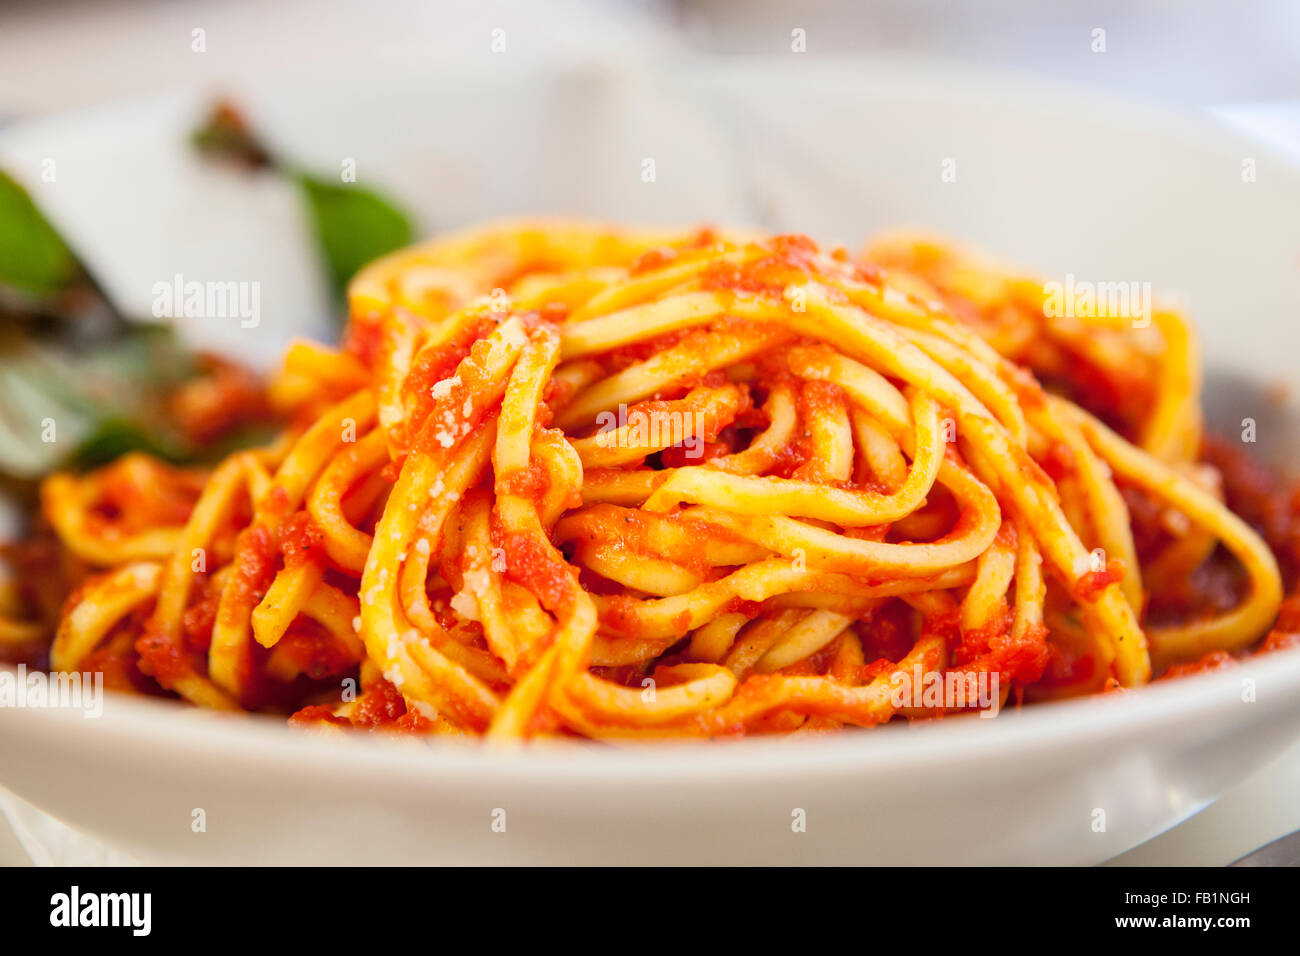 Teller mit Spaghetti Bolognese mit Basilikum garnieren. Nahaufnahme mit selektiven Fokus erschossen Stockfoto